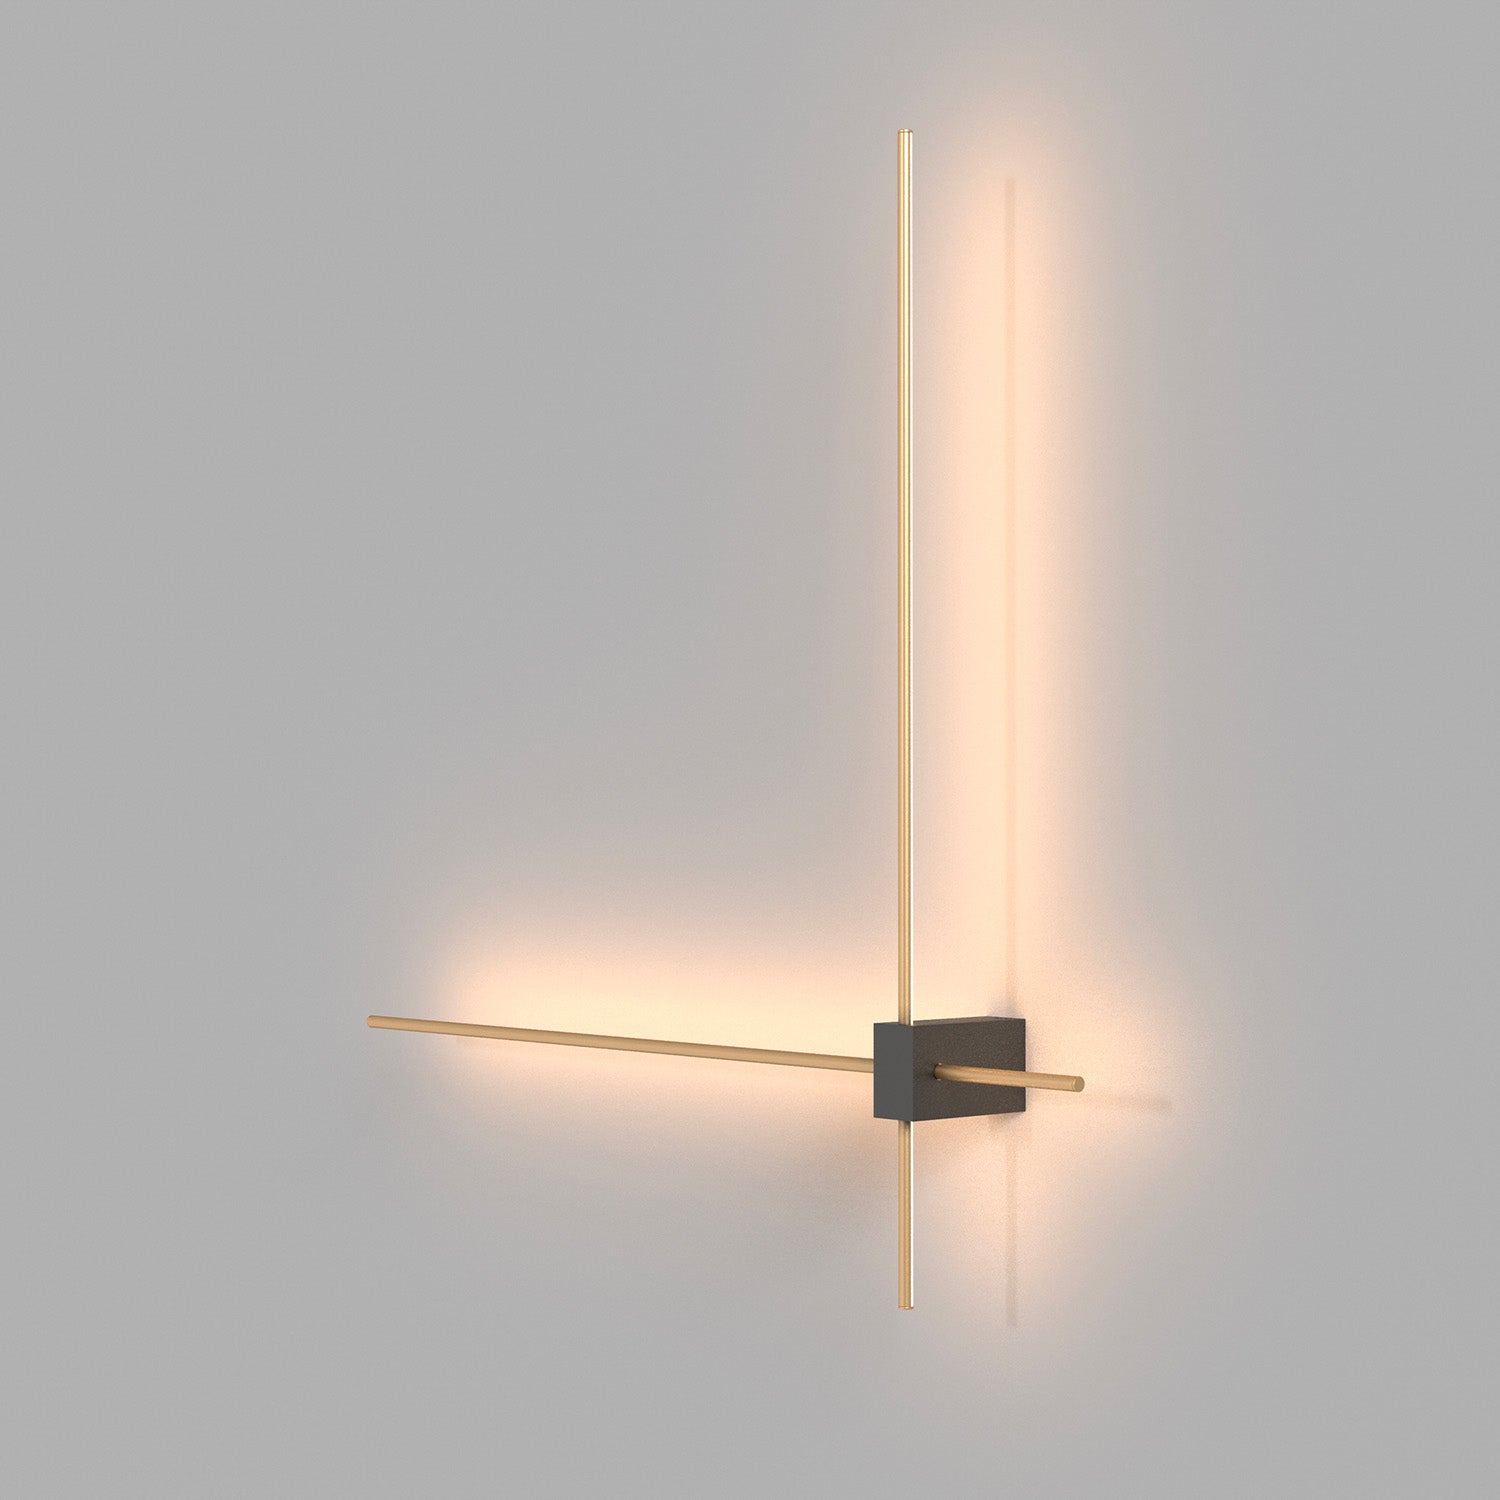 PARS B – Integrierte schlanke LED-Wandleuchte, Stabform